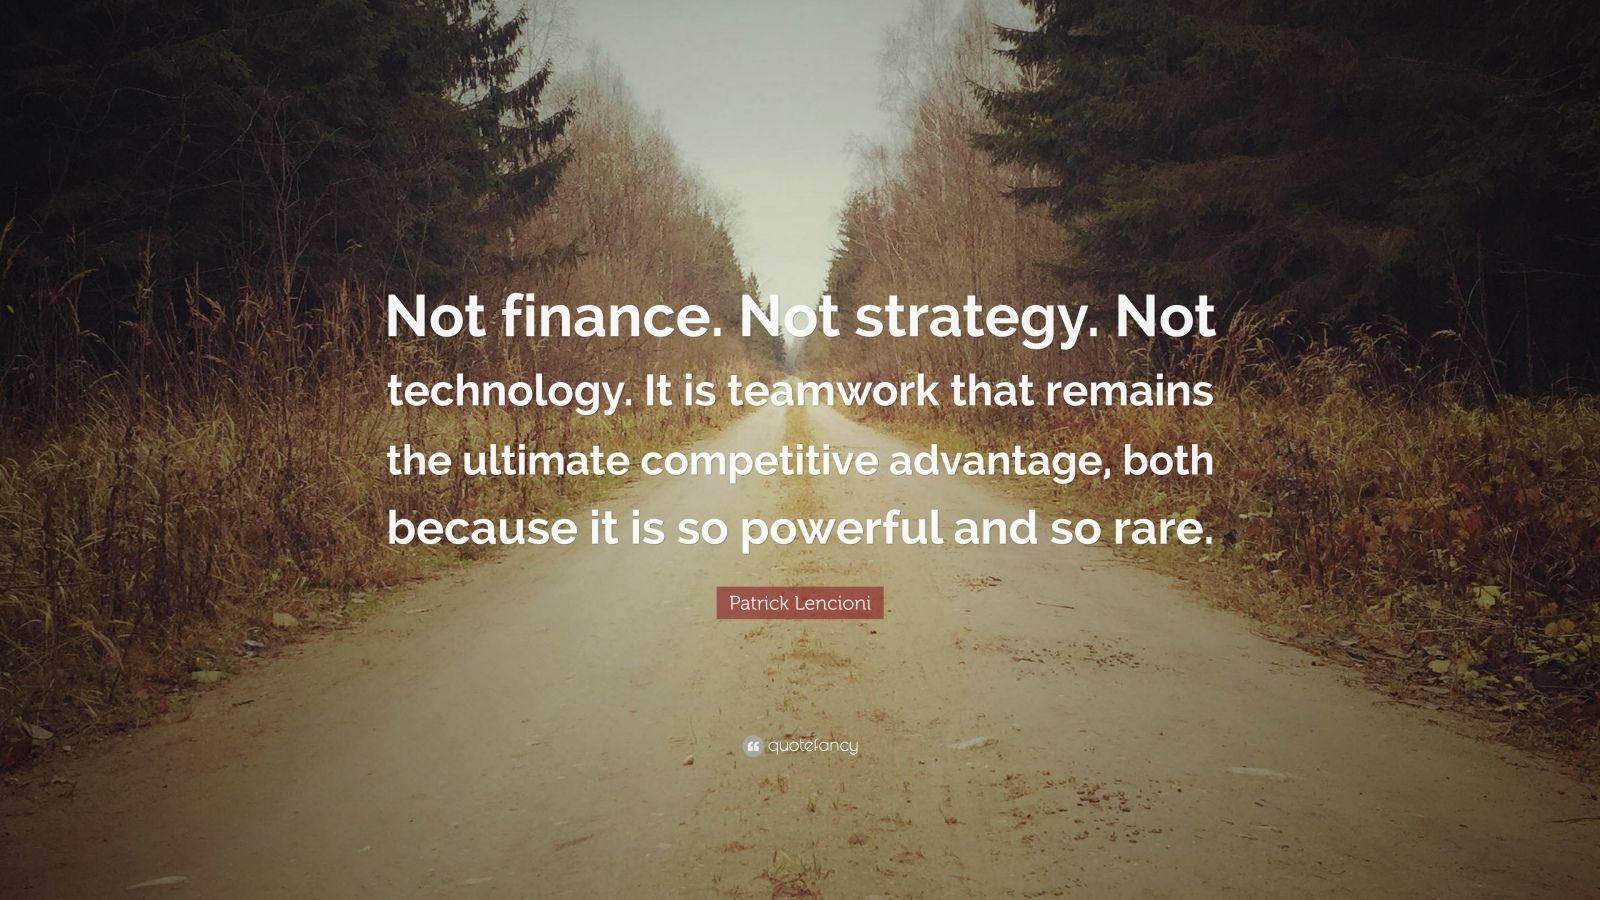 Patrick Lencioni Quote: “Not finance. Not strategy. Not technology. It